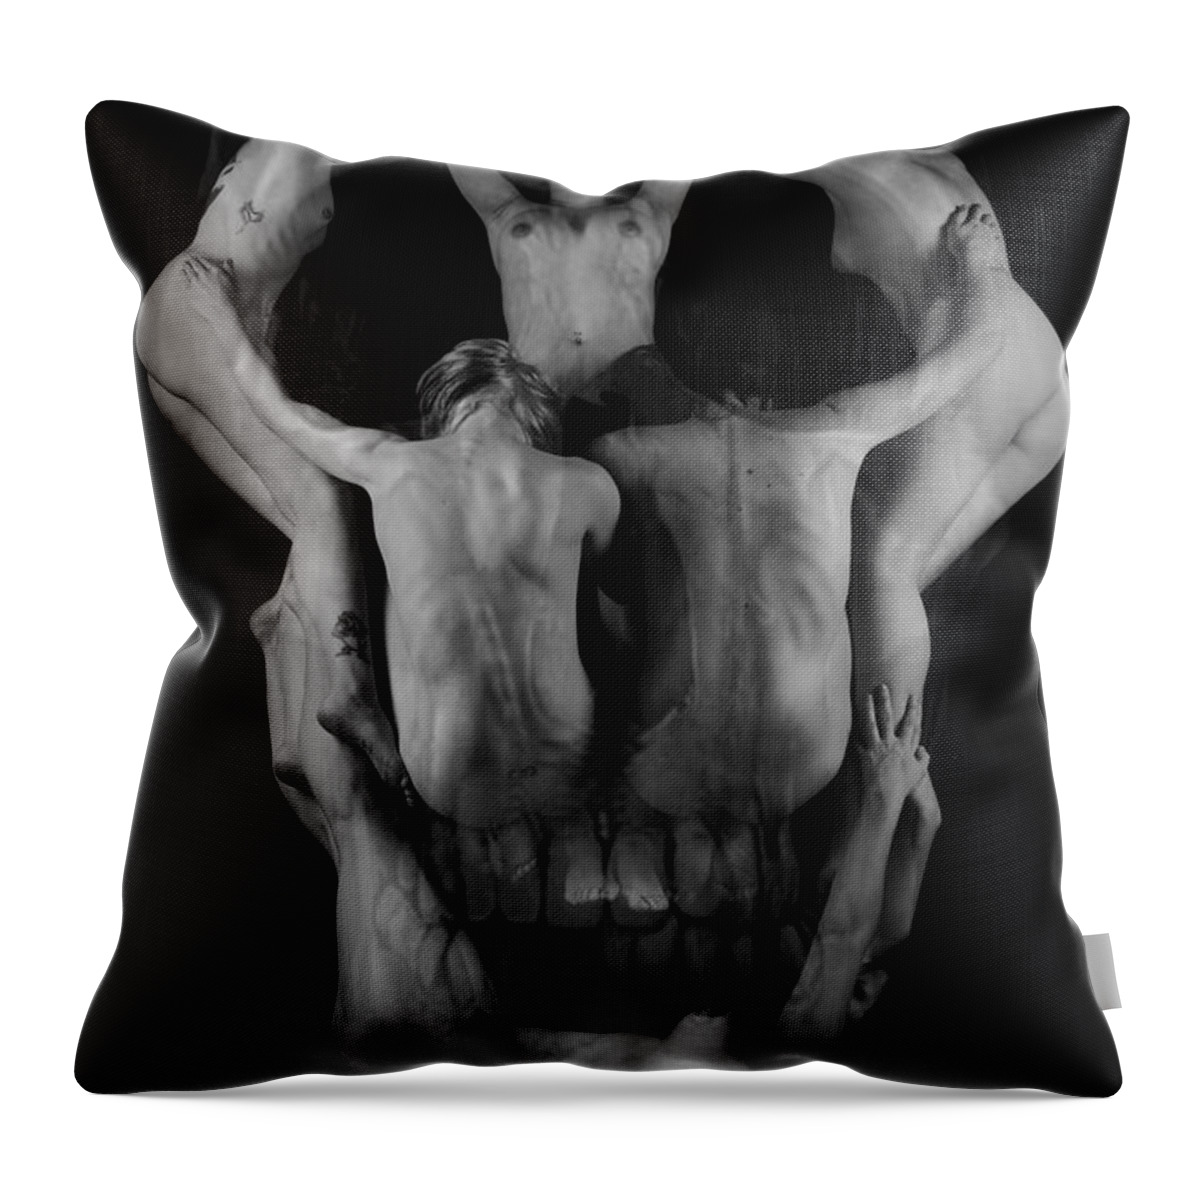 Artistic Photographs Throw Pillow featuring the photograph Human skull by Robert WK Clark